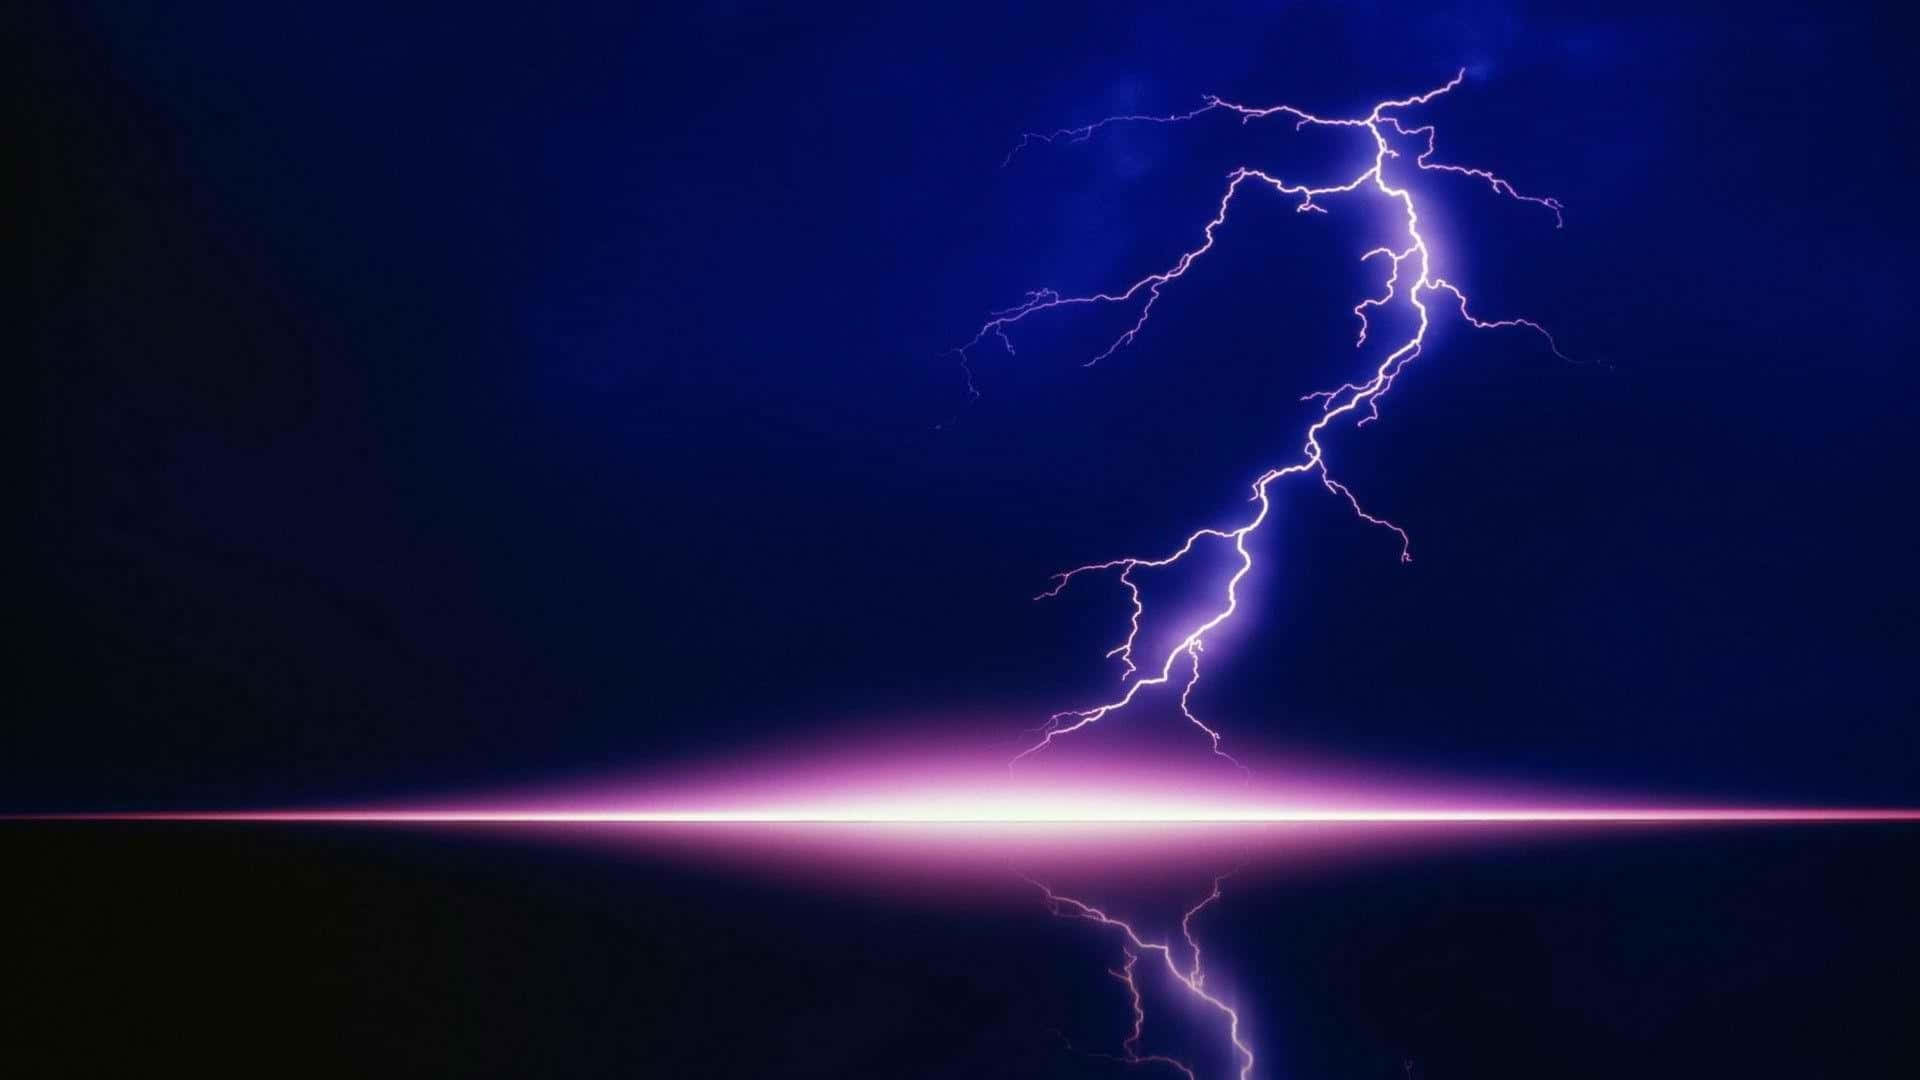 An Illuminating Lightning Storm at Night